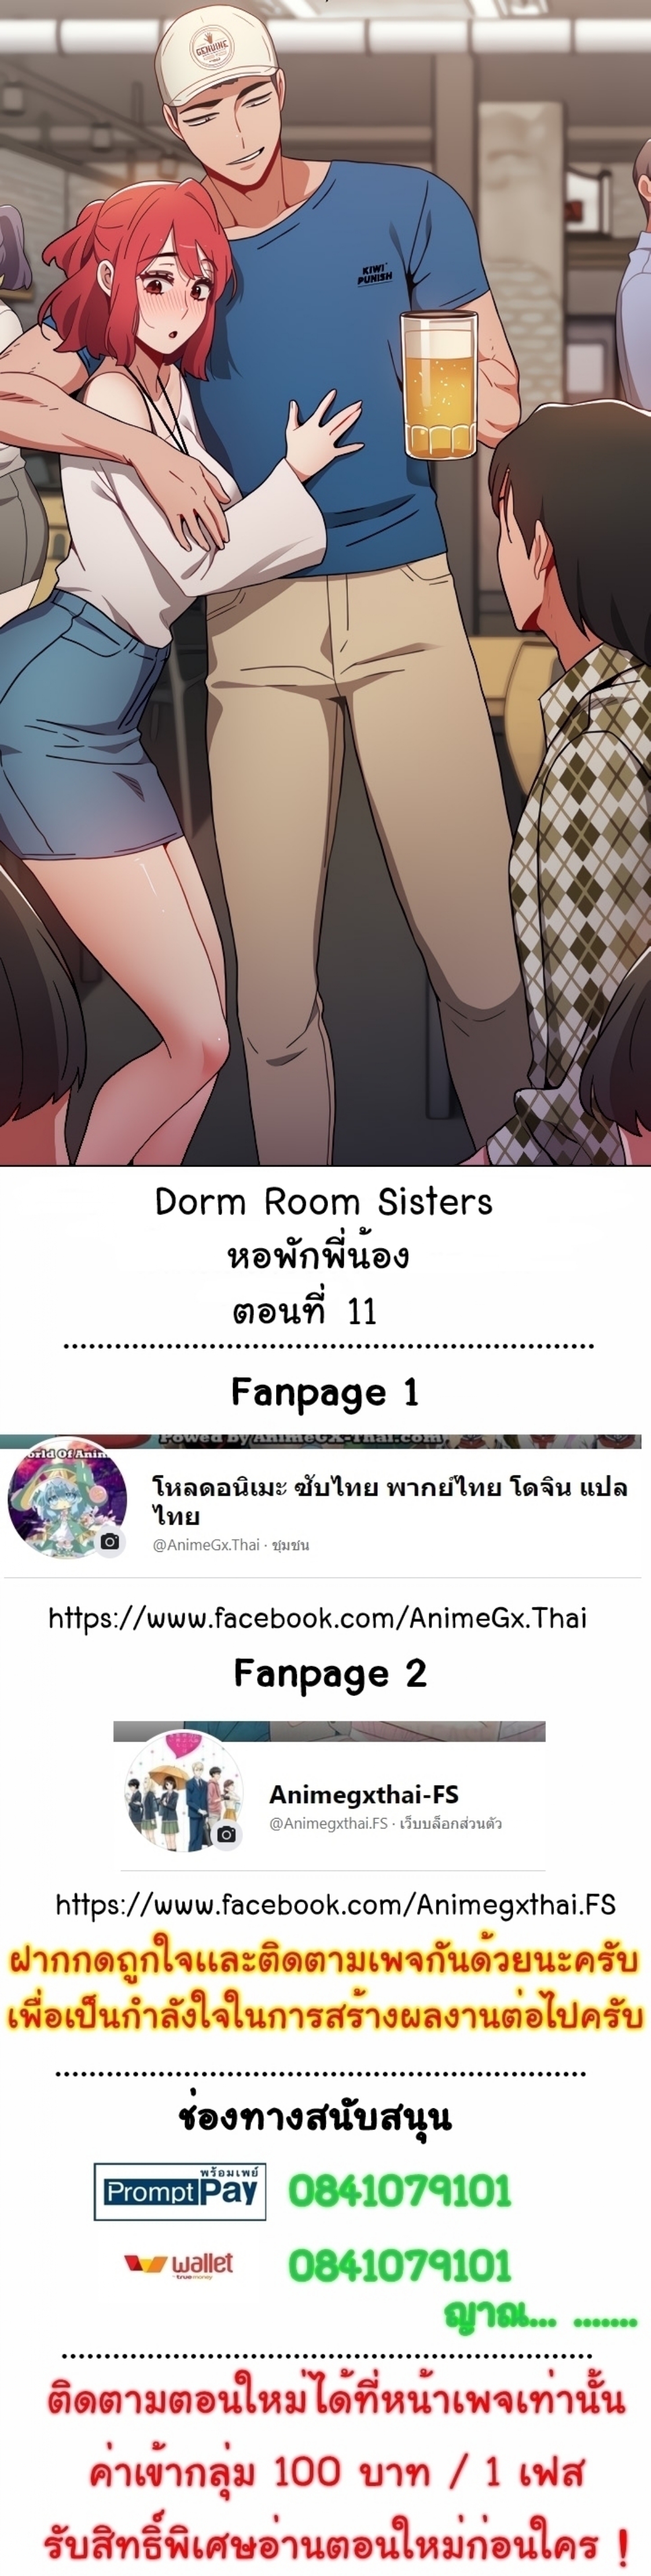 Dorm Room Sisters 11 (1)